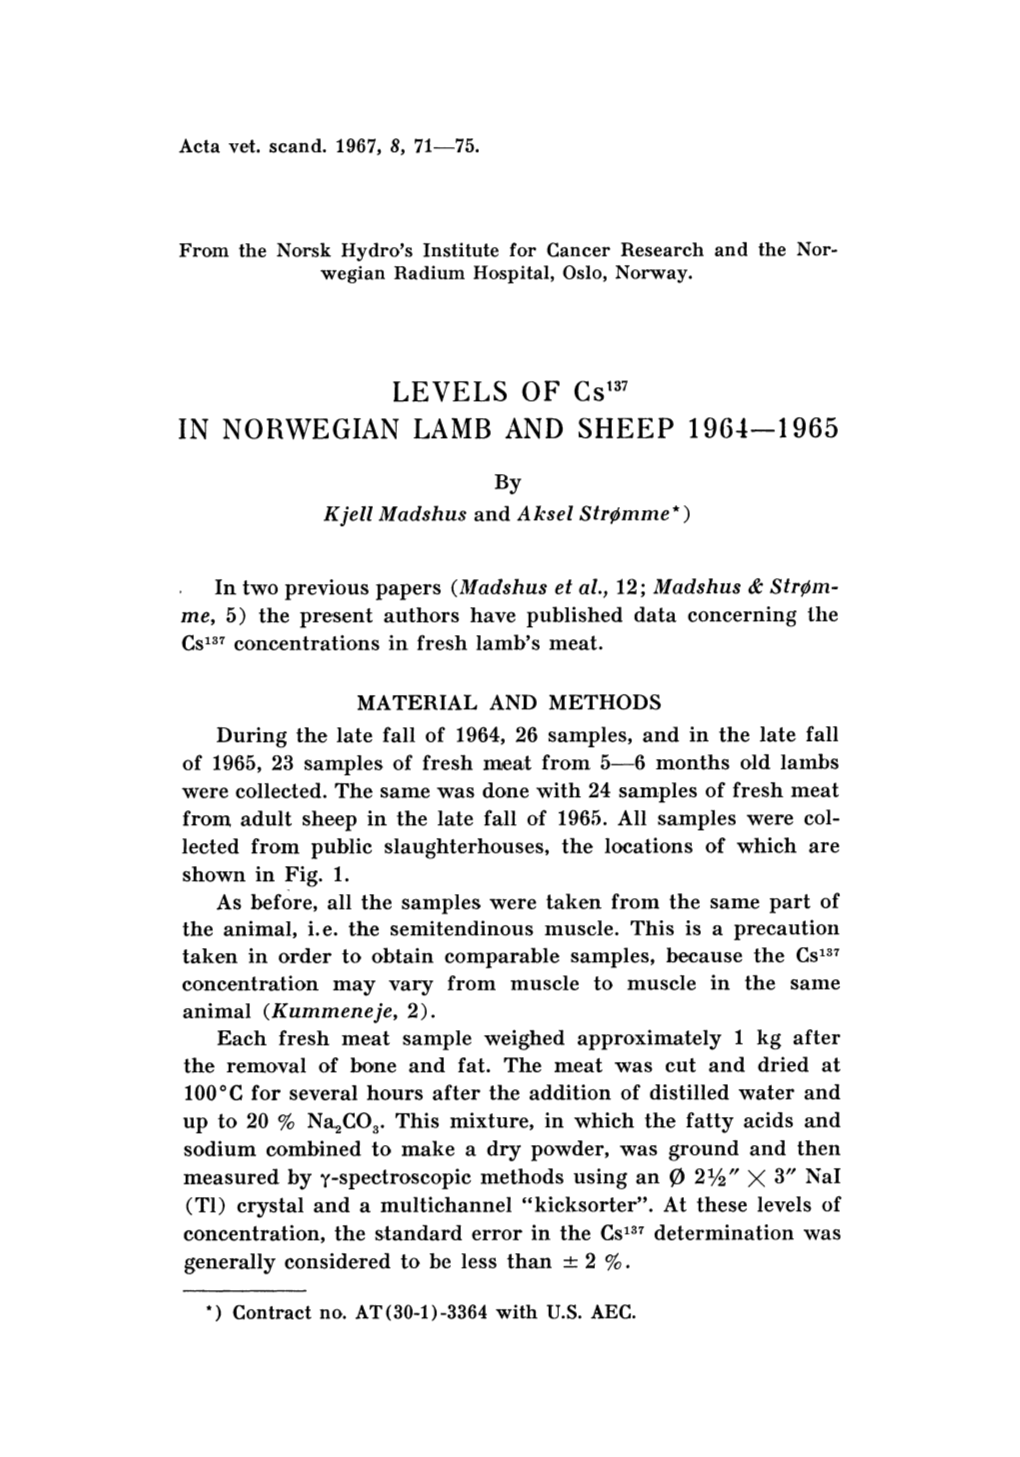 LEVELS of Cs137 in NORWEGIAN LAMB and SHEEP 196-1-1965